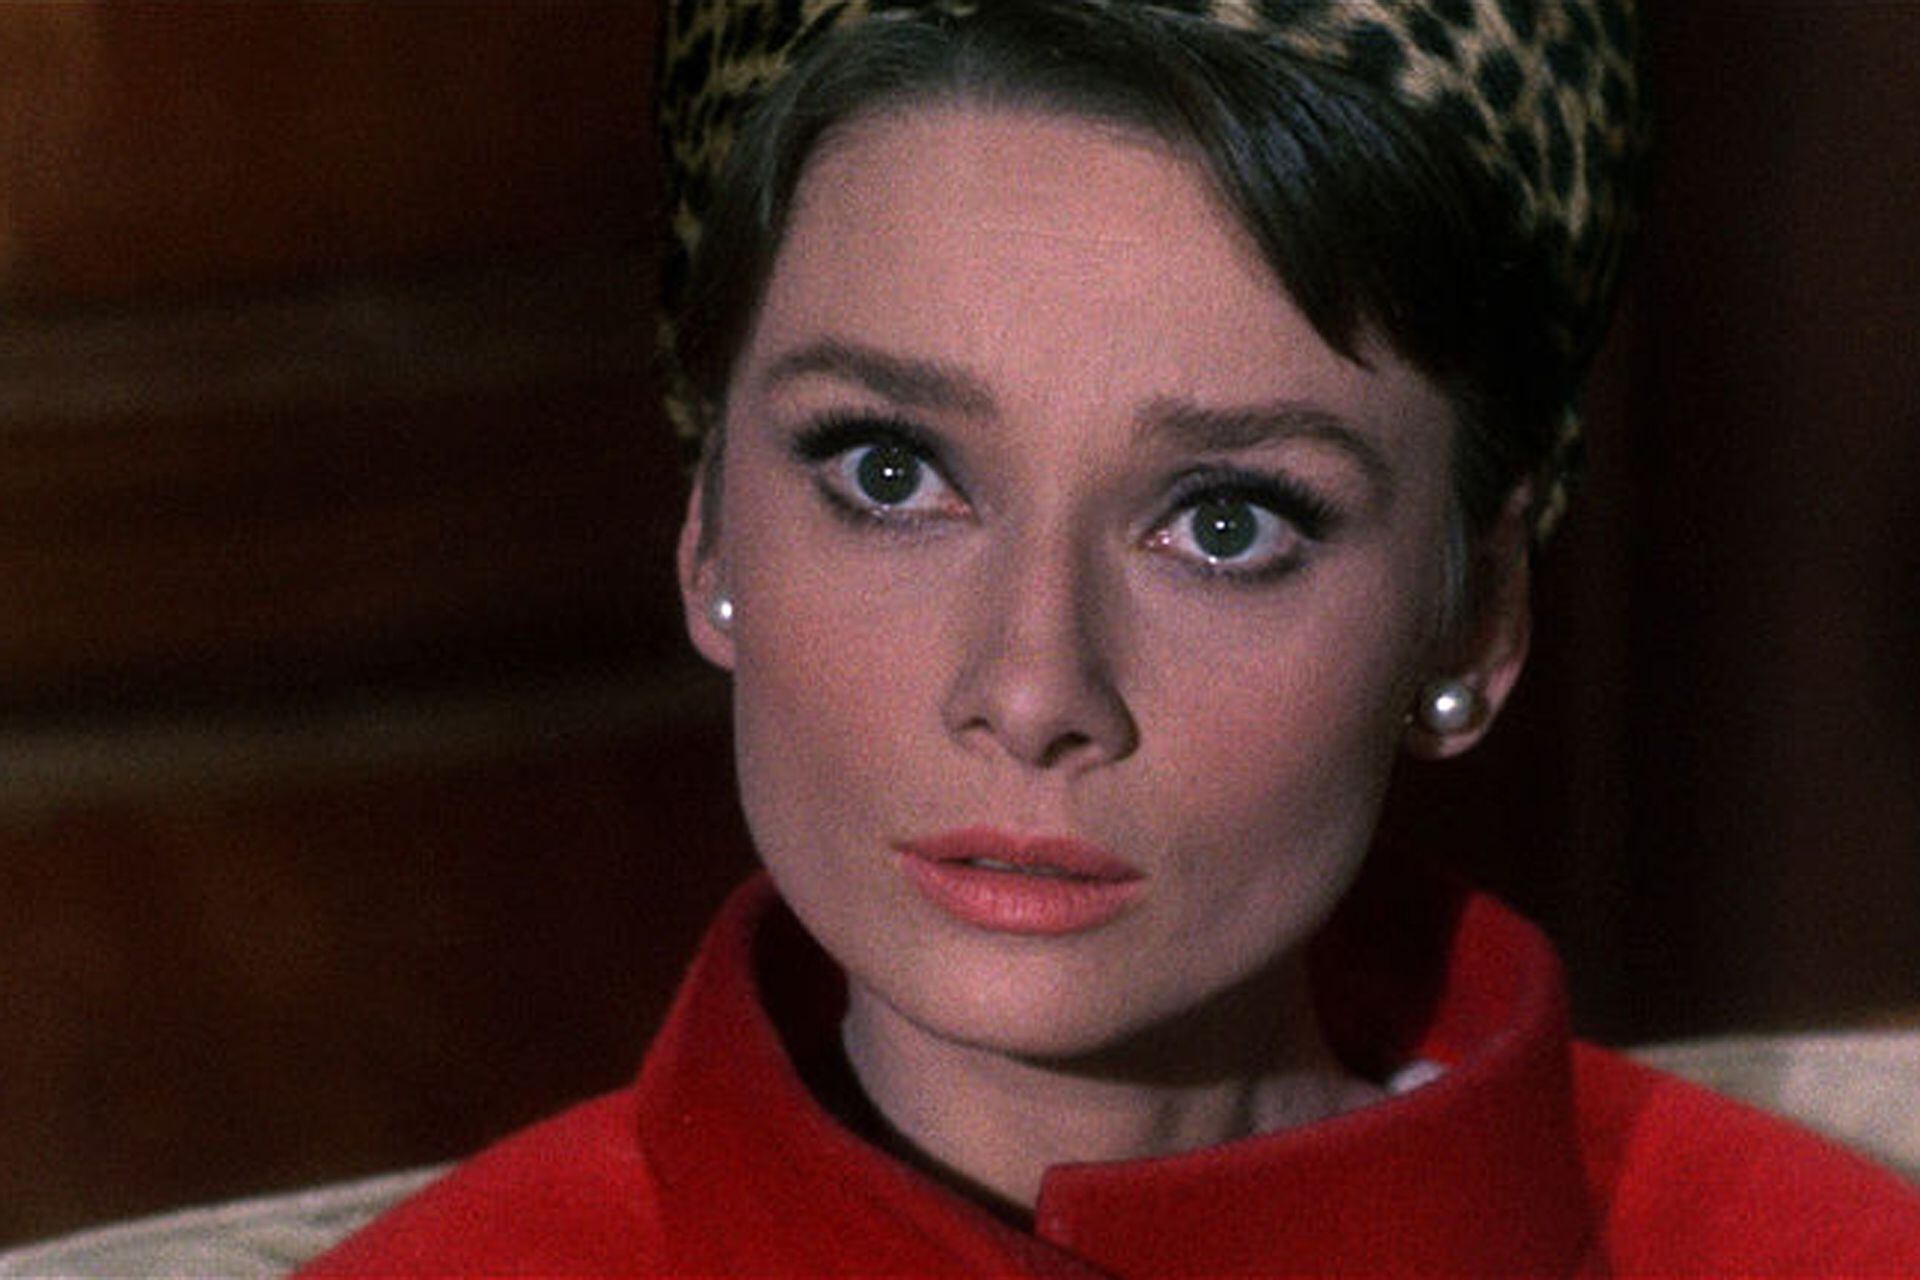 Audrey Hepburn, an unforgettable face